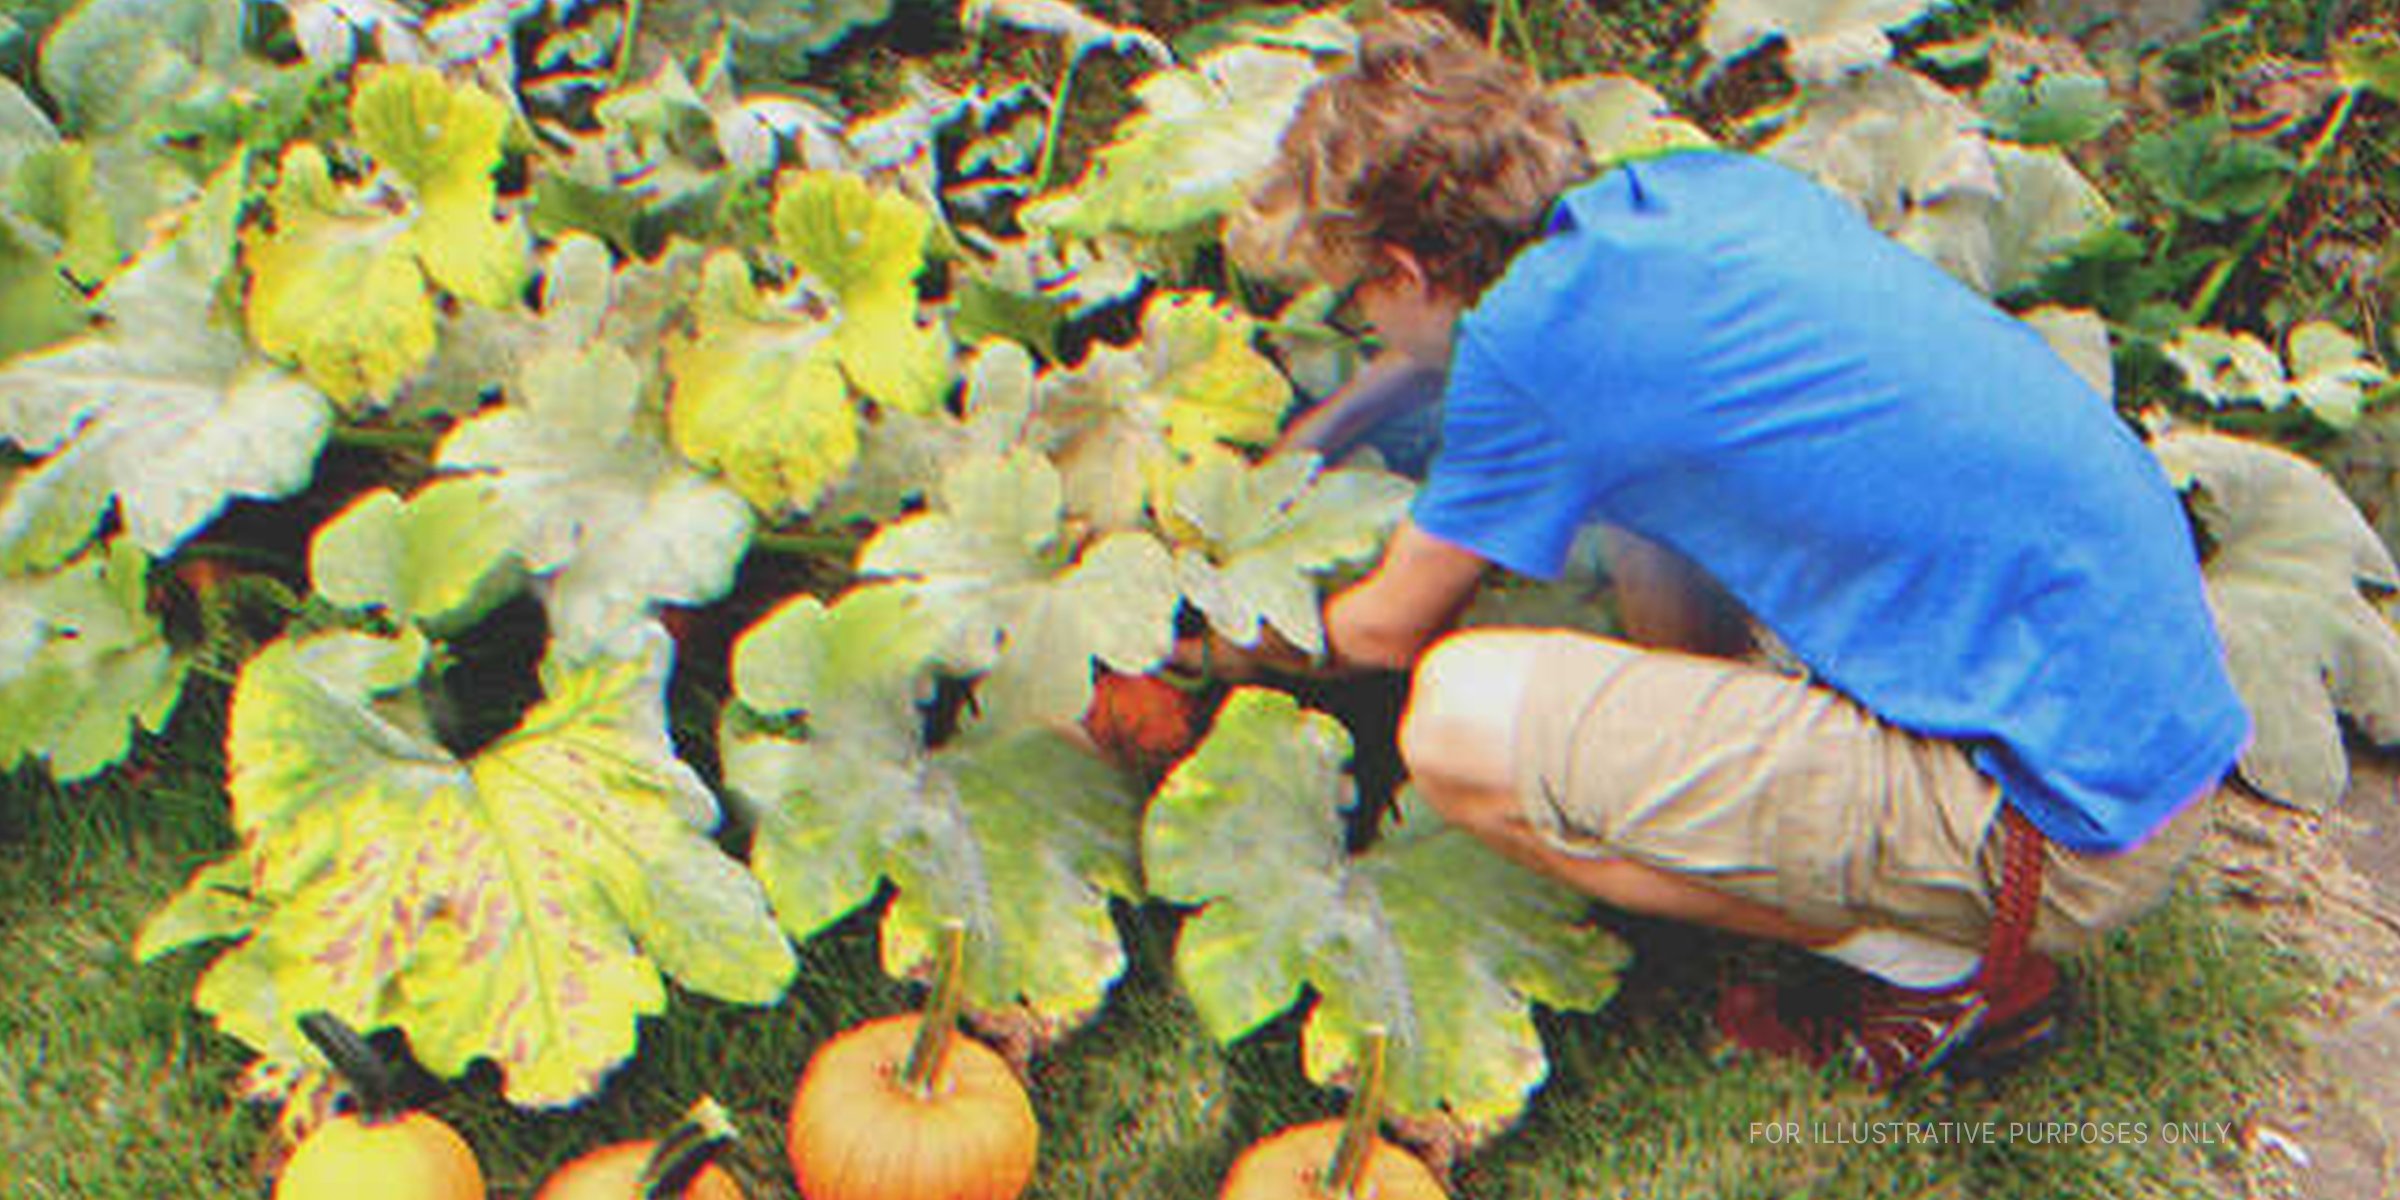 Boy working in the garden | Source: Shutterstock